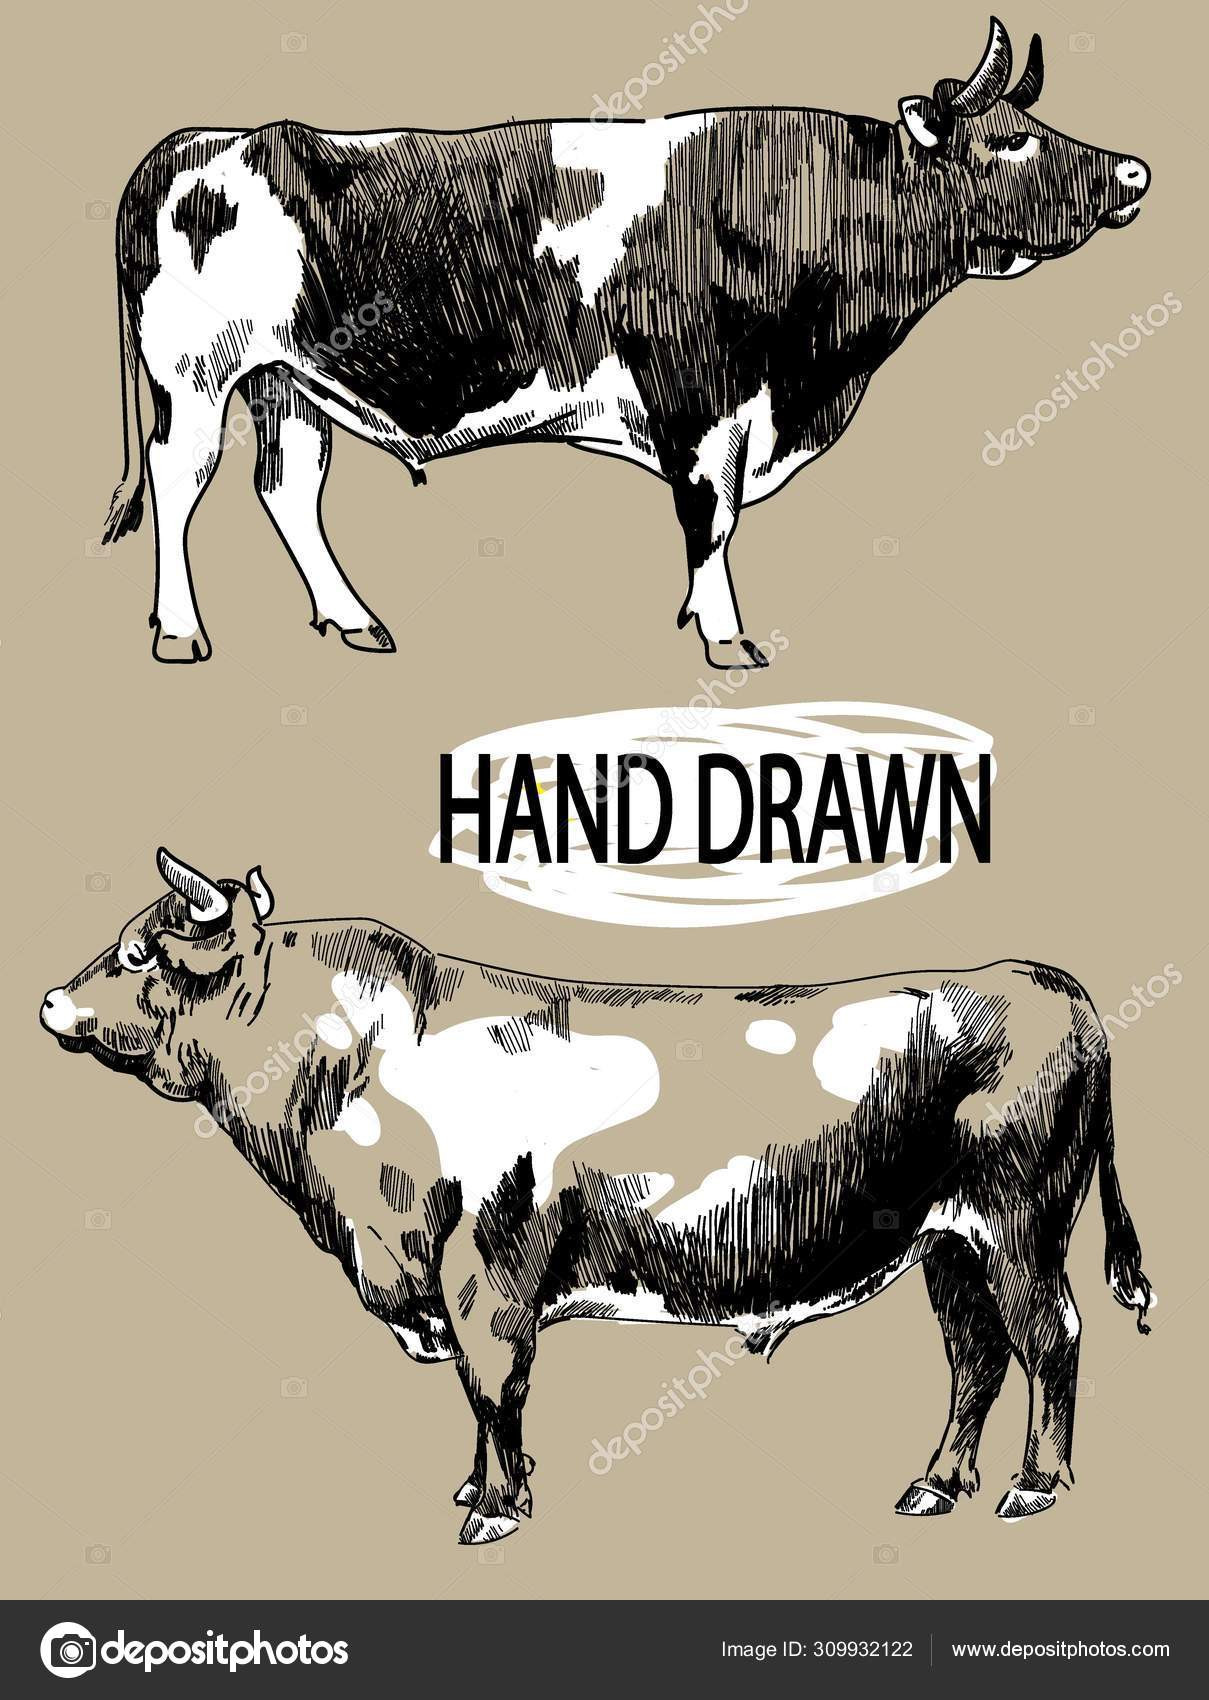 depositphotos stock illustration set images cow image set